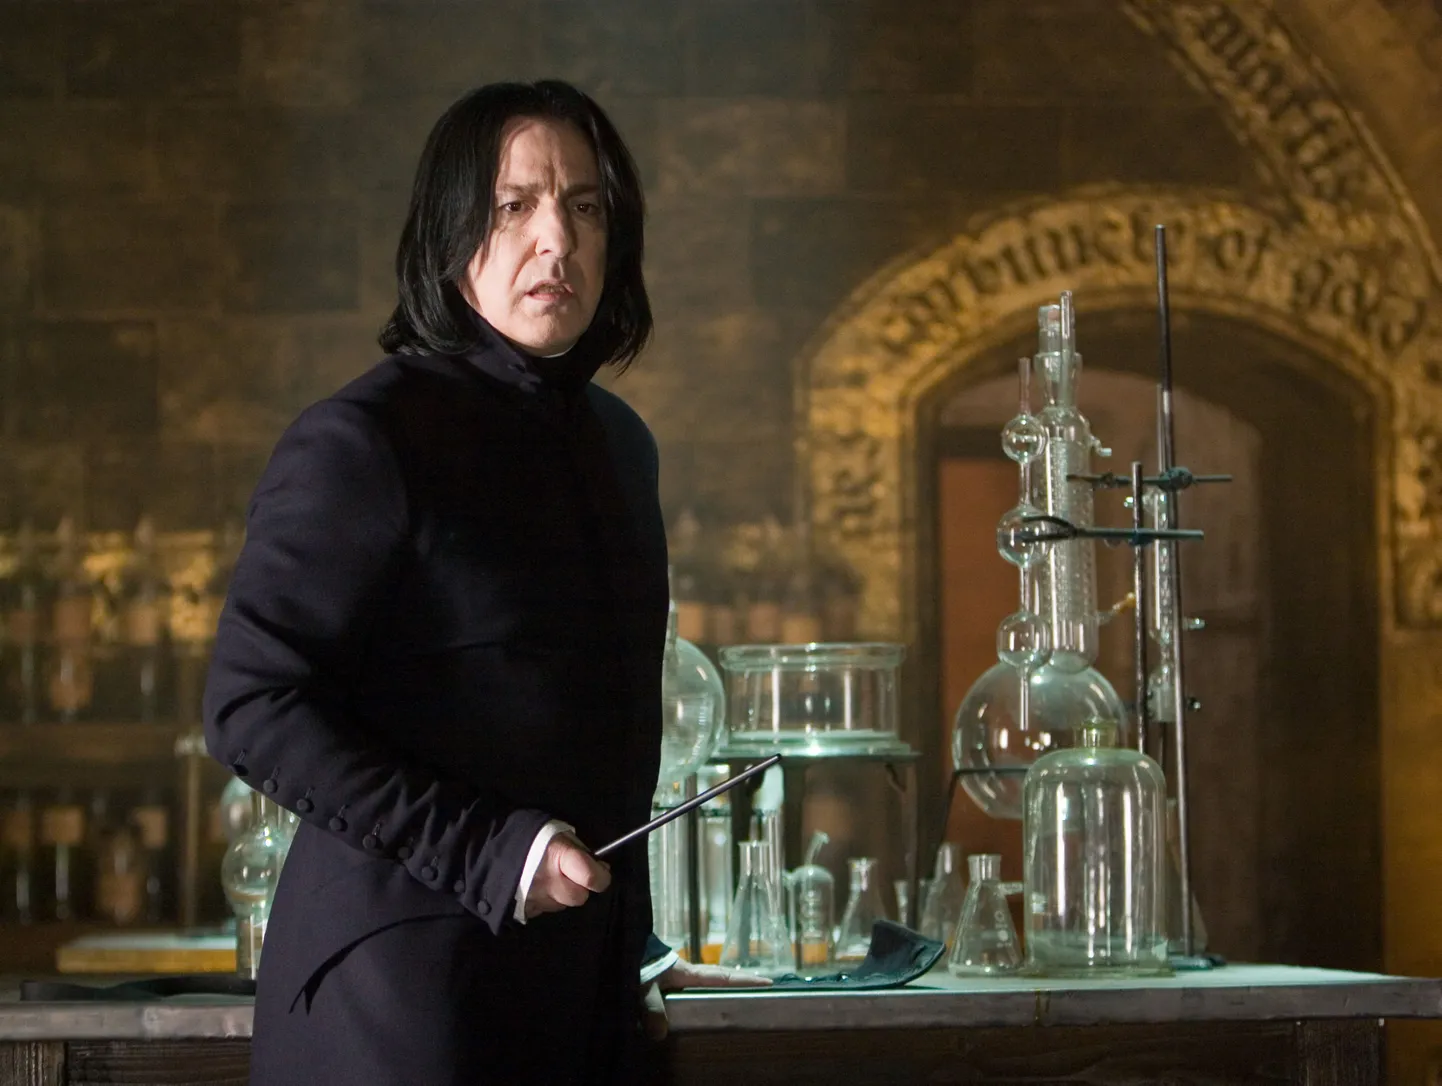 Näitleja Alan Rickman Severus Snape 'i rollis